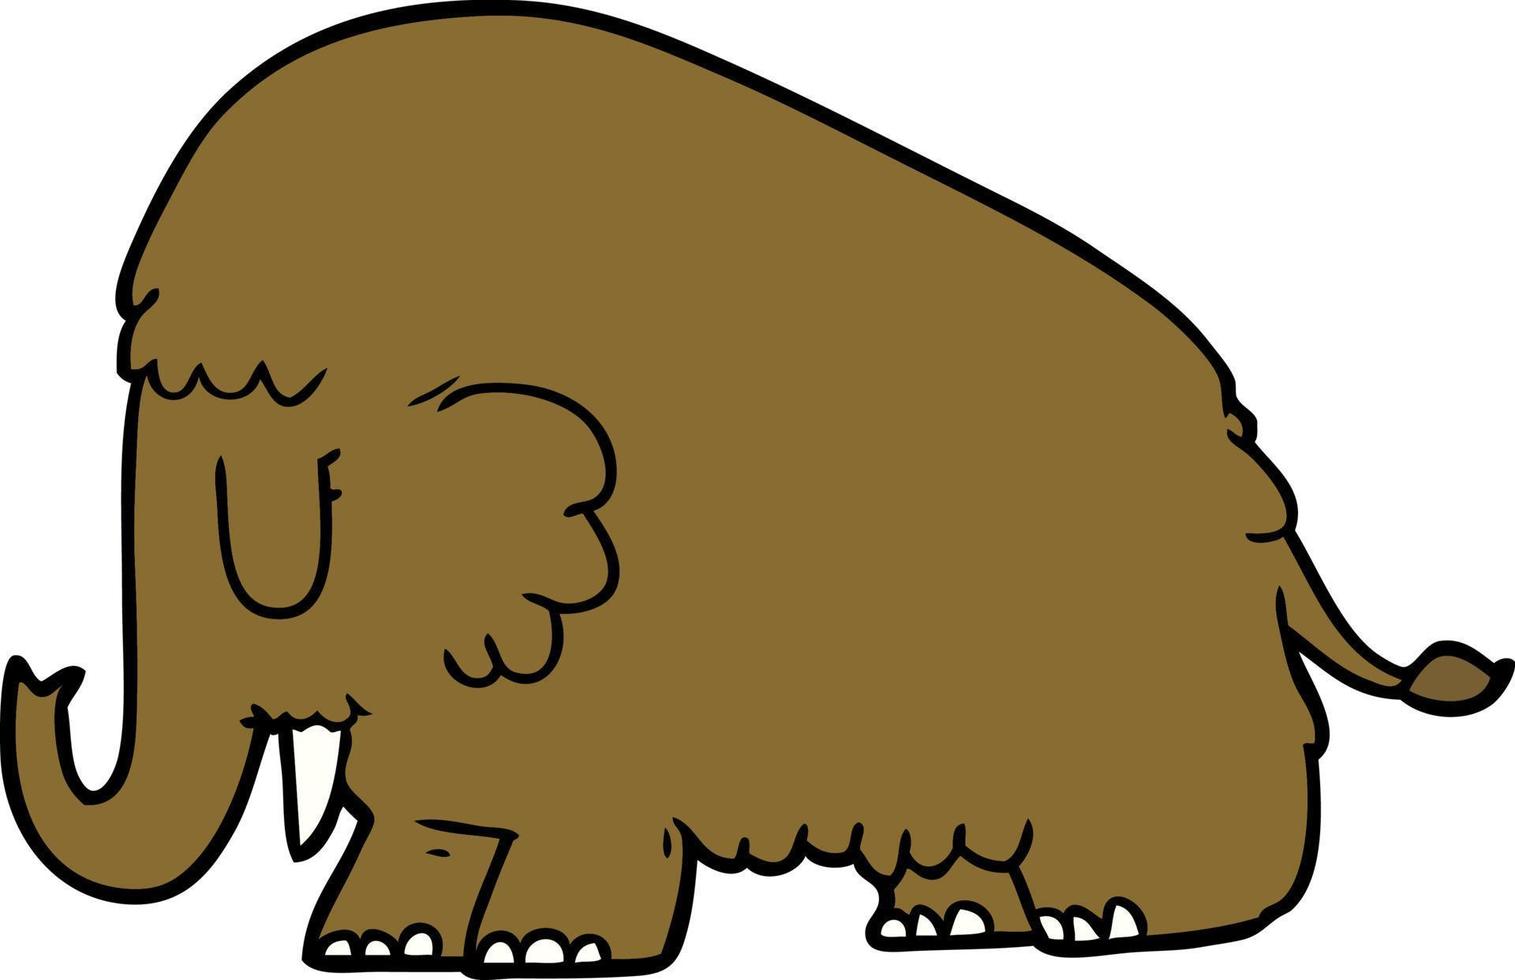 Vector cartoon mammoth